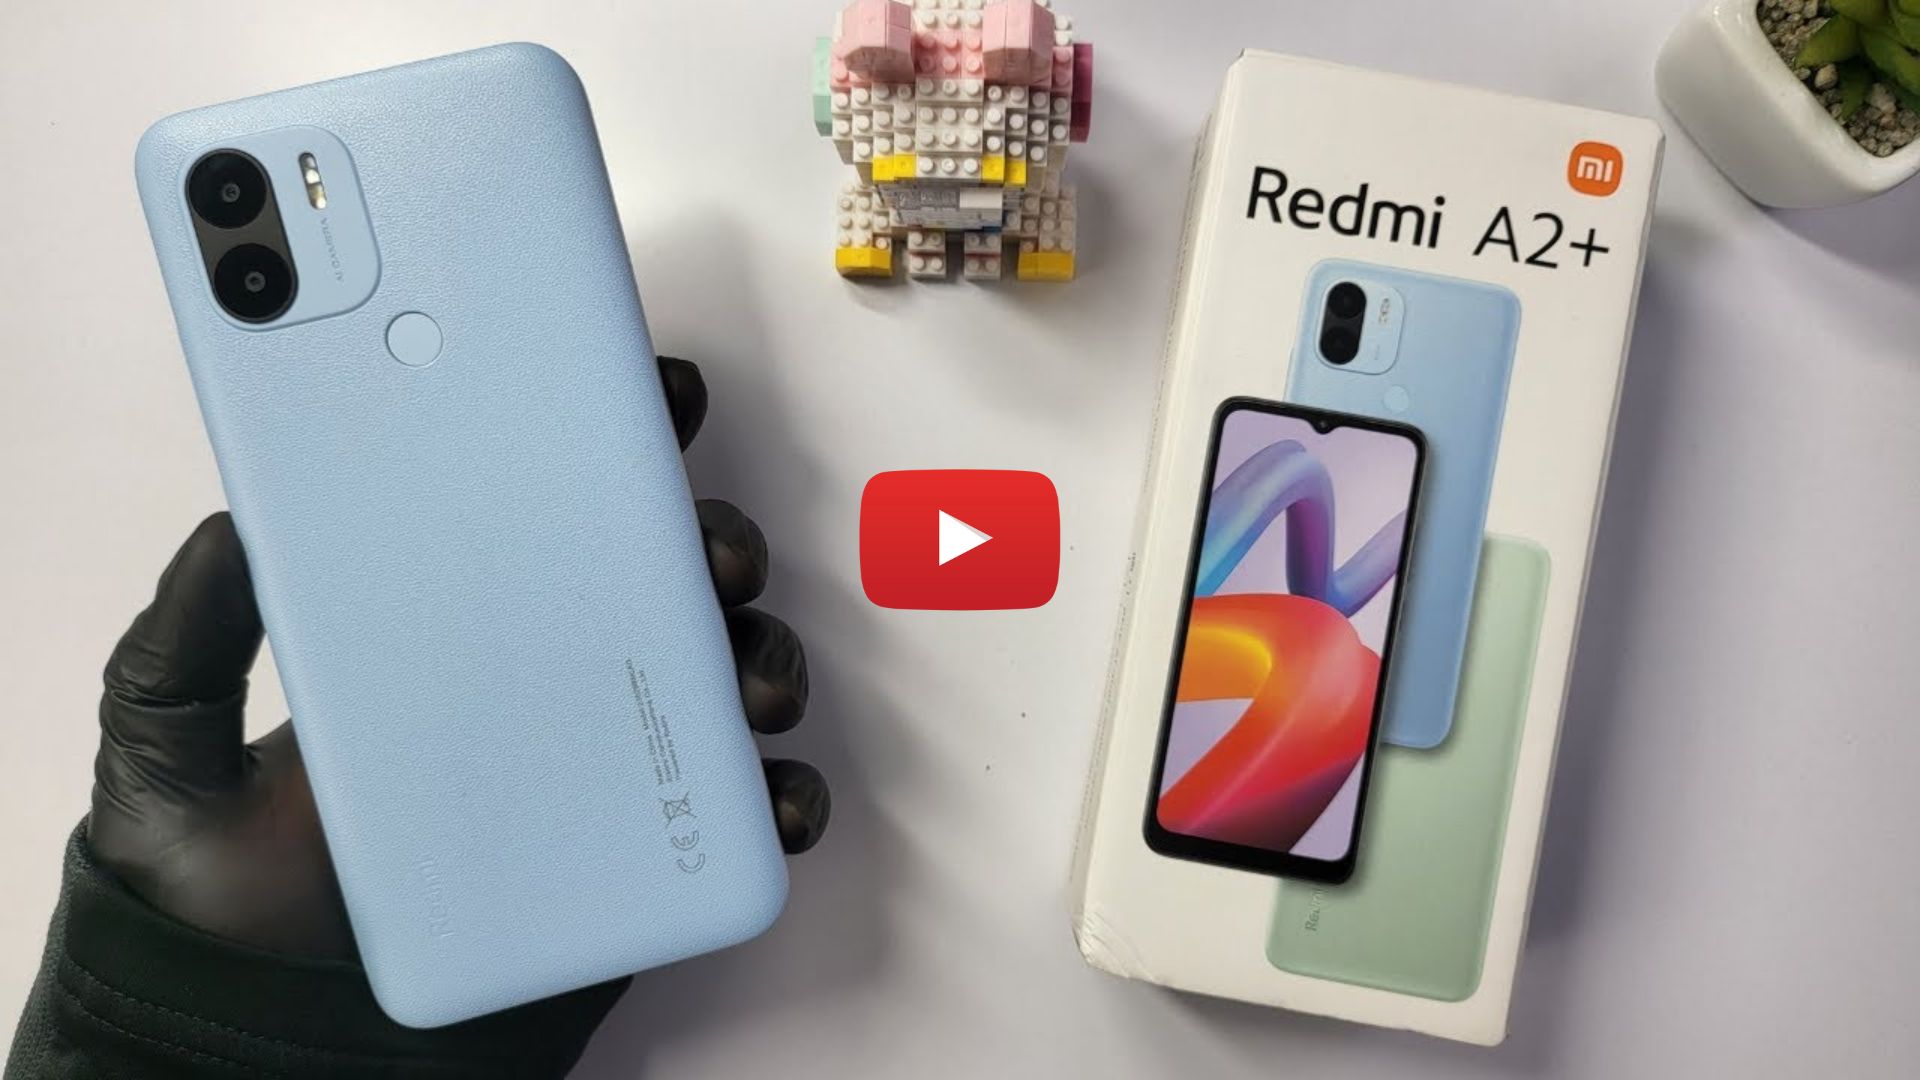 Xiaomi Redmi Note 12s Unboxing  Hands-On, Antutu, Design, Unbox, Camera  Test 